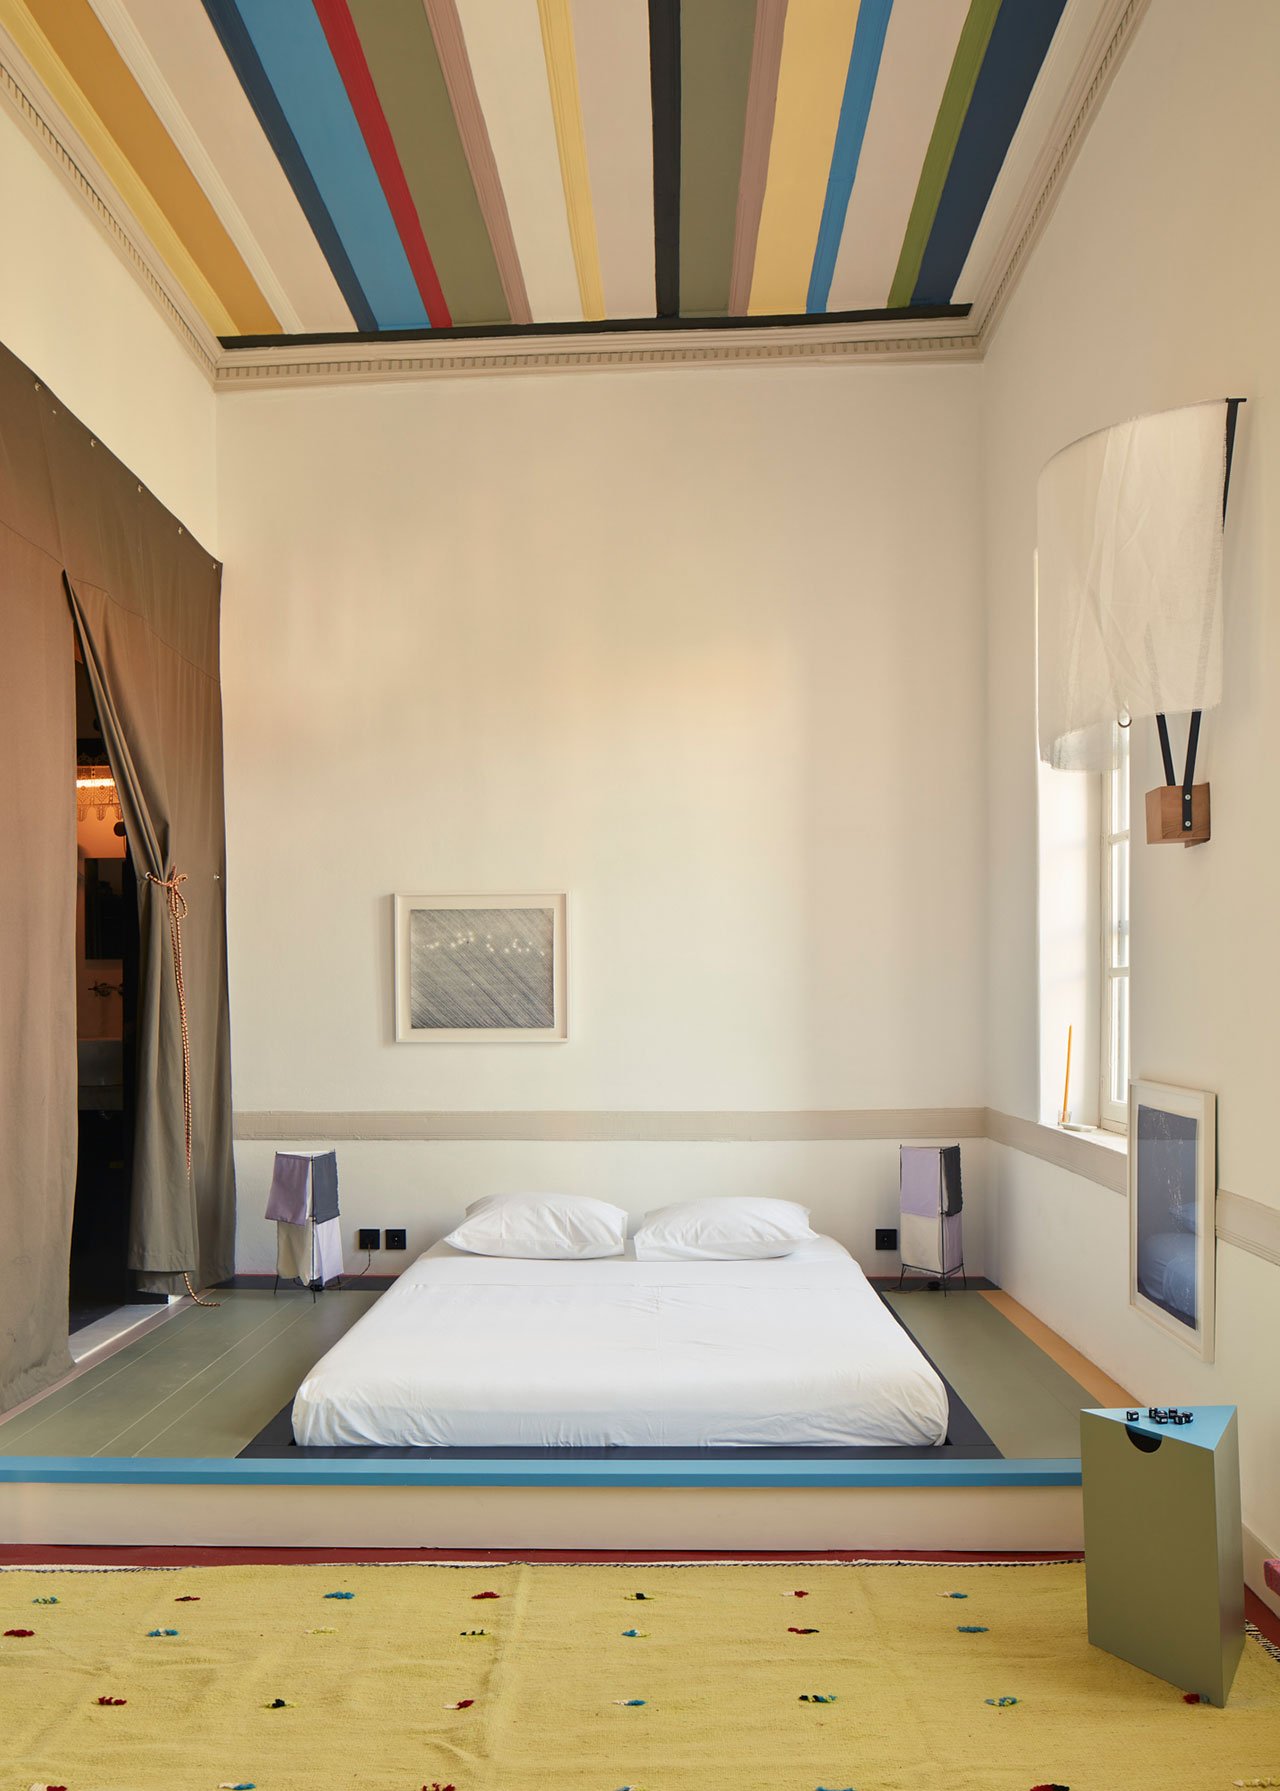 4Rooms Kastellorizo. Interior design project for La Società delle Api residency program. Room designed by Julie Richoz. Photography by Depasquale+Maffini.